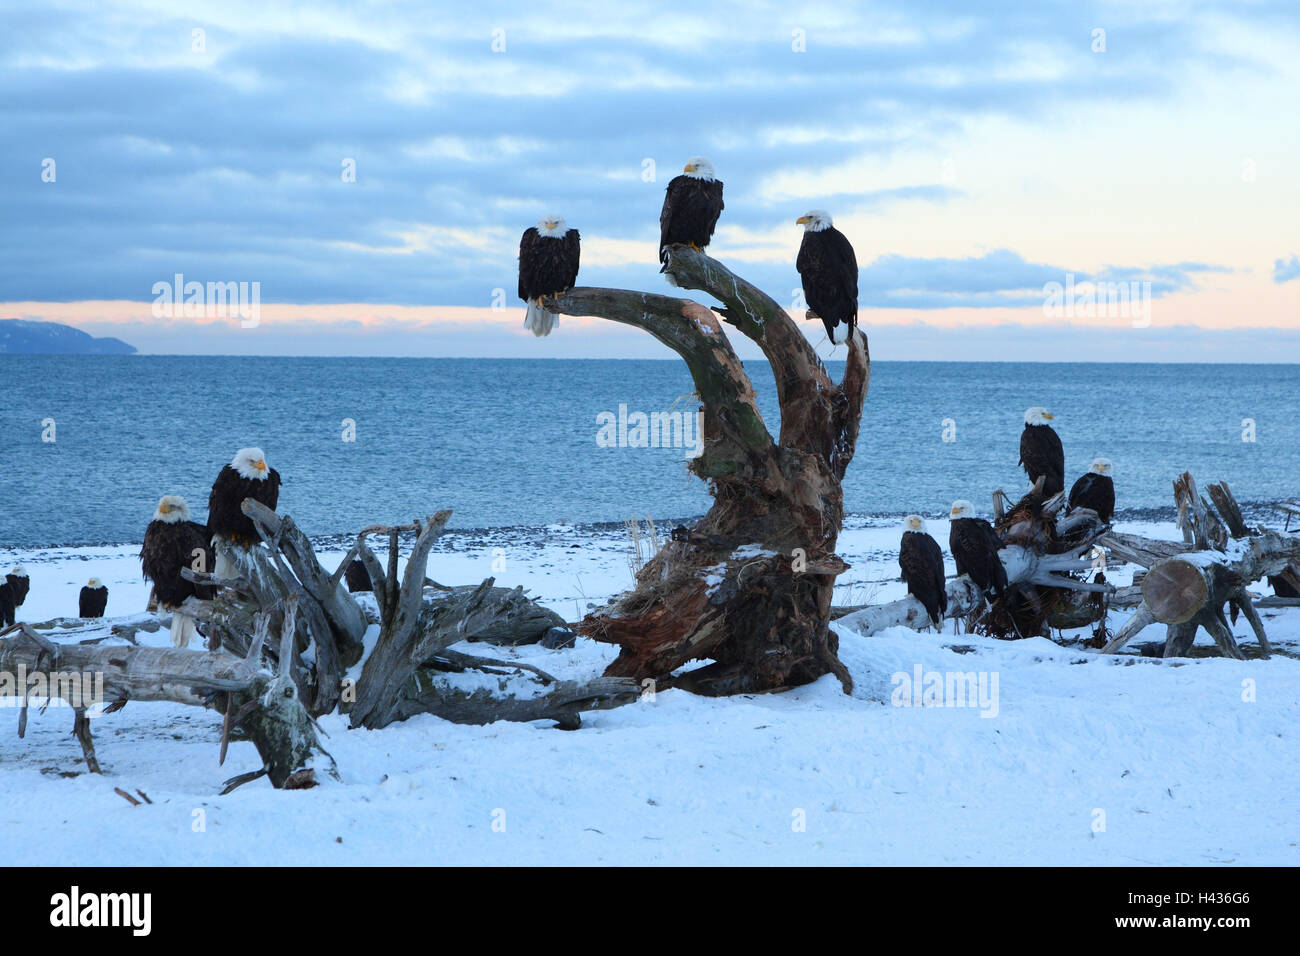 White head lake eagle, winter, beach, Stock Photo